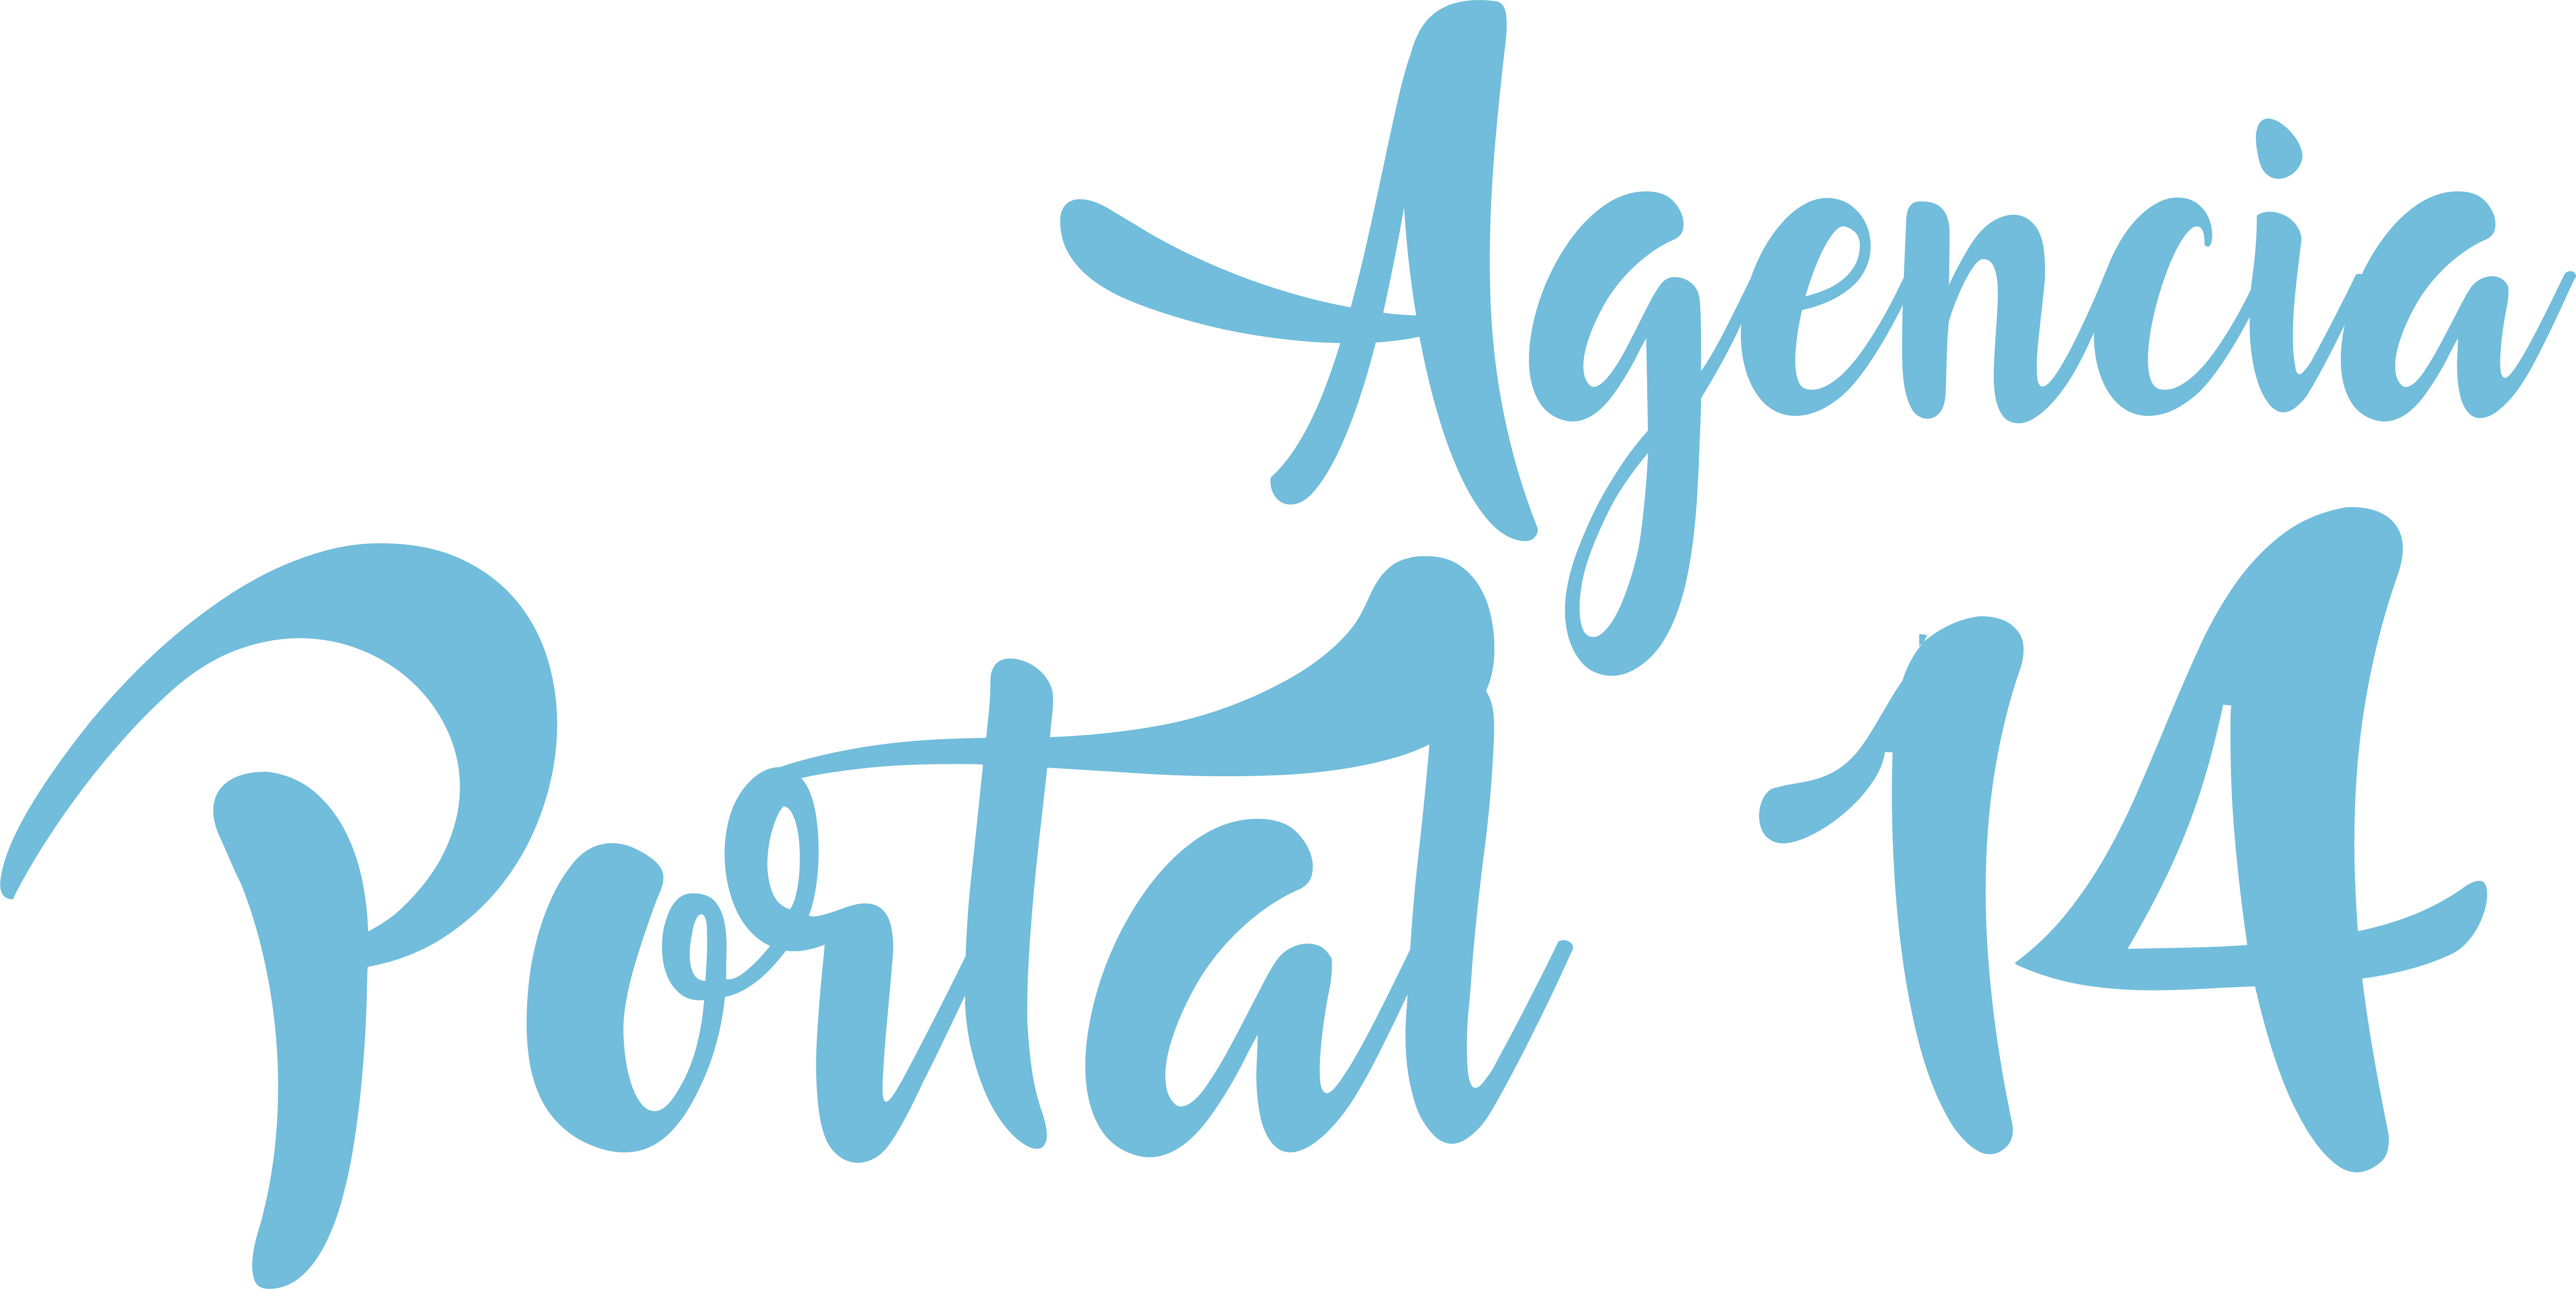 Agencia Portal 14